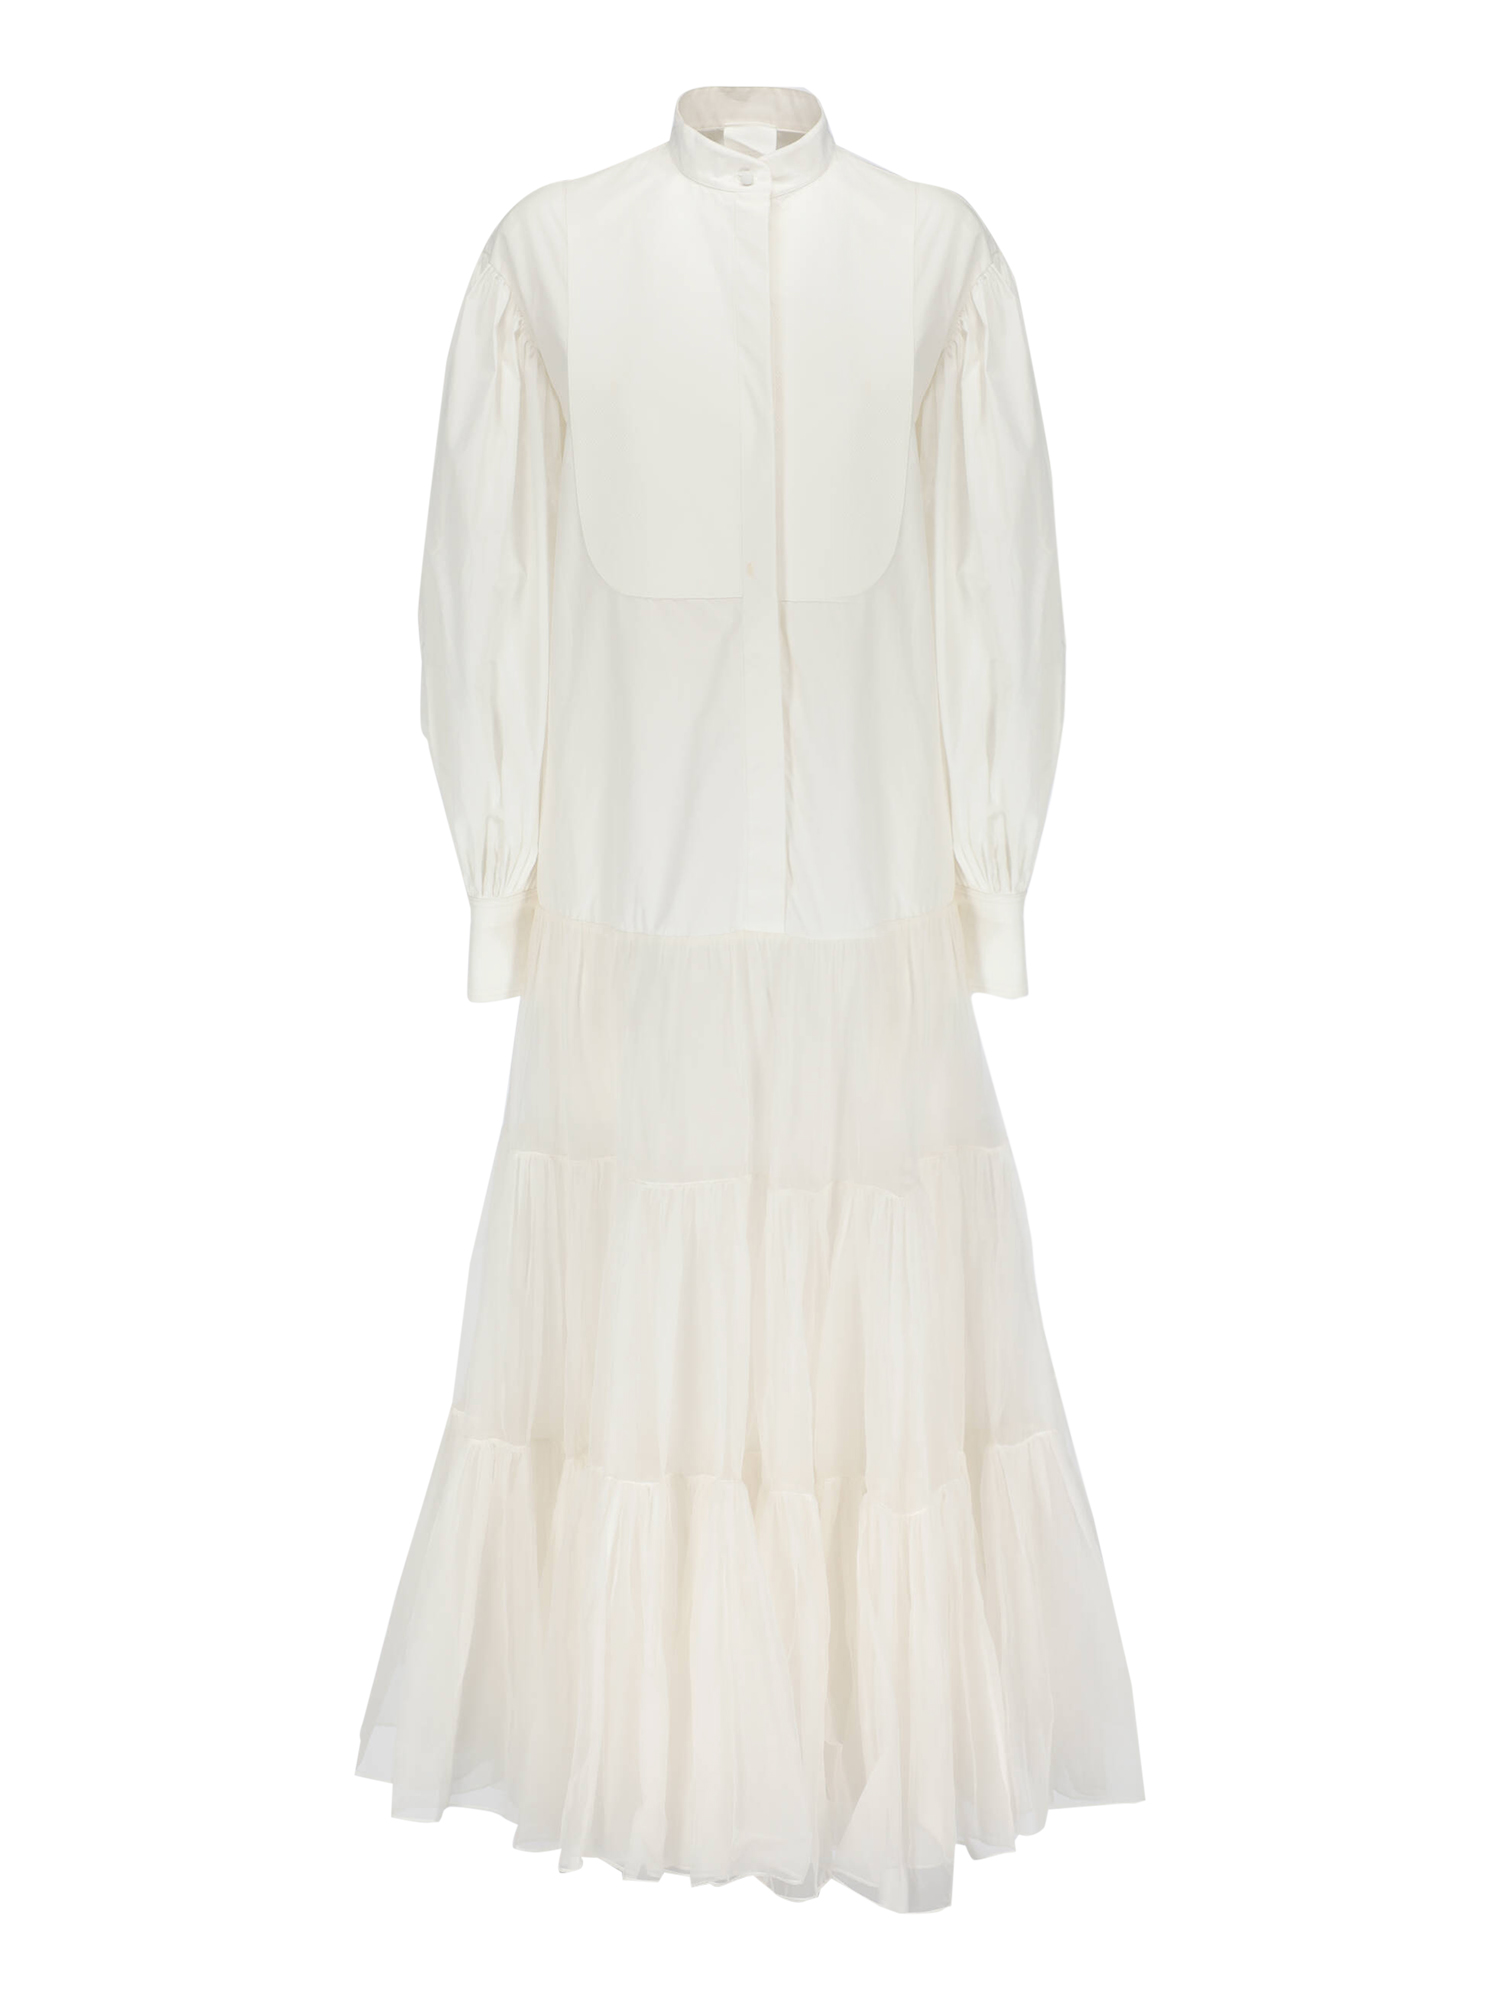 Robes Pour Femme - Valentino - En Silk White - Taille:  -